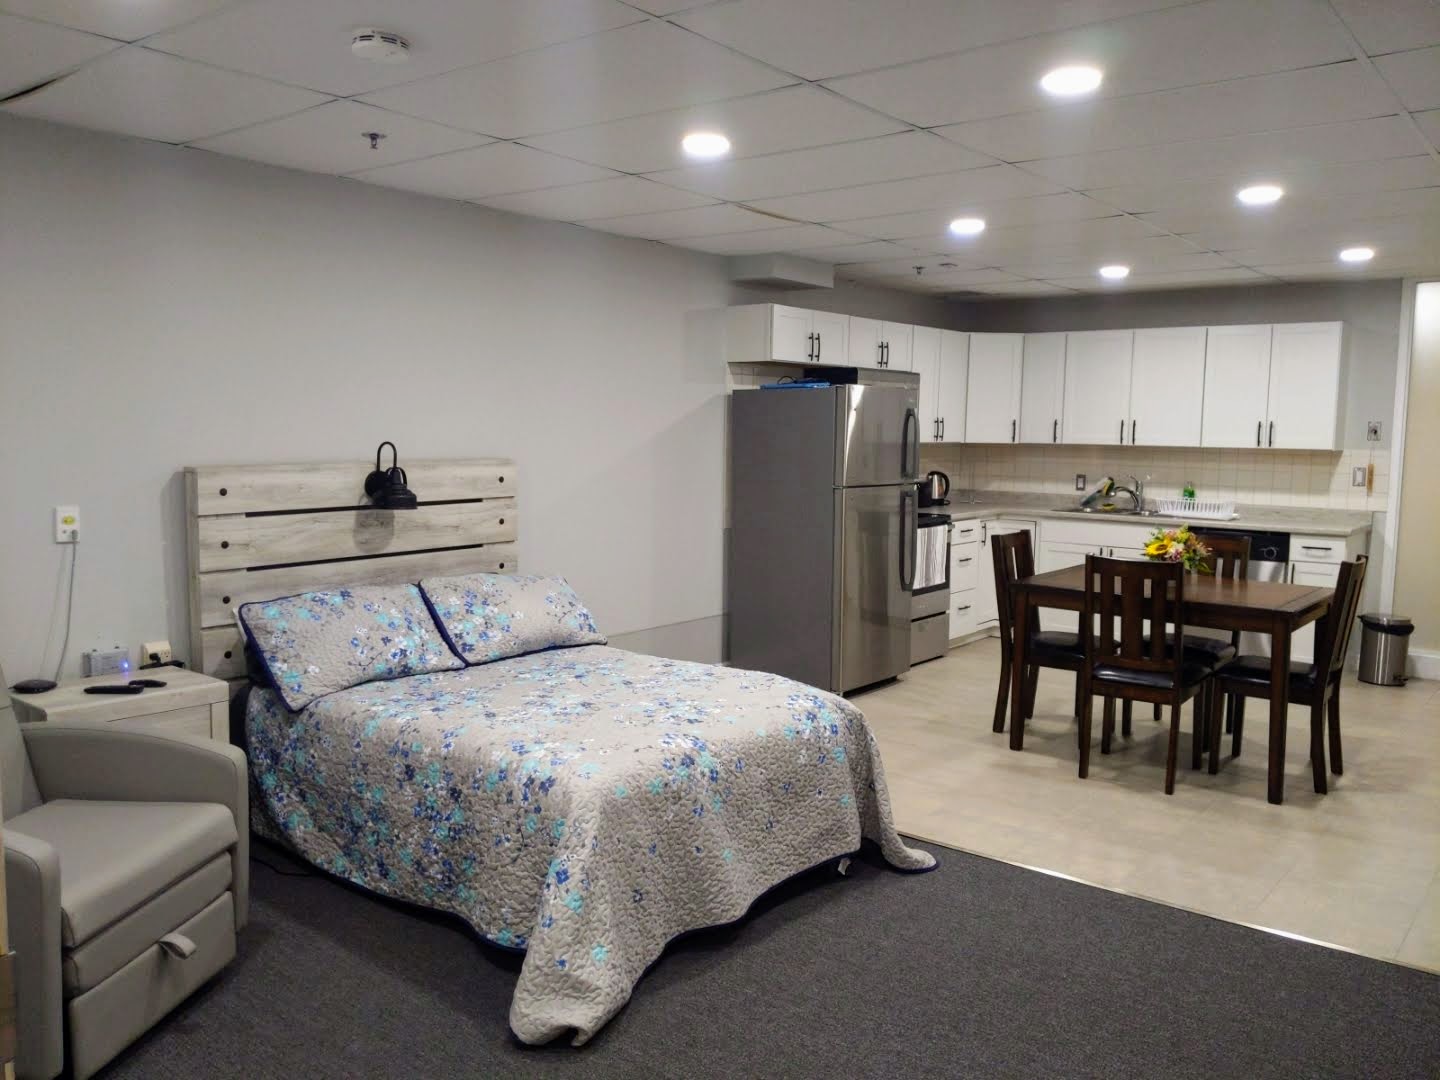 SJCCC opens new rehabilitation apartment